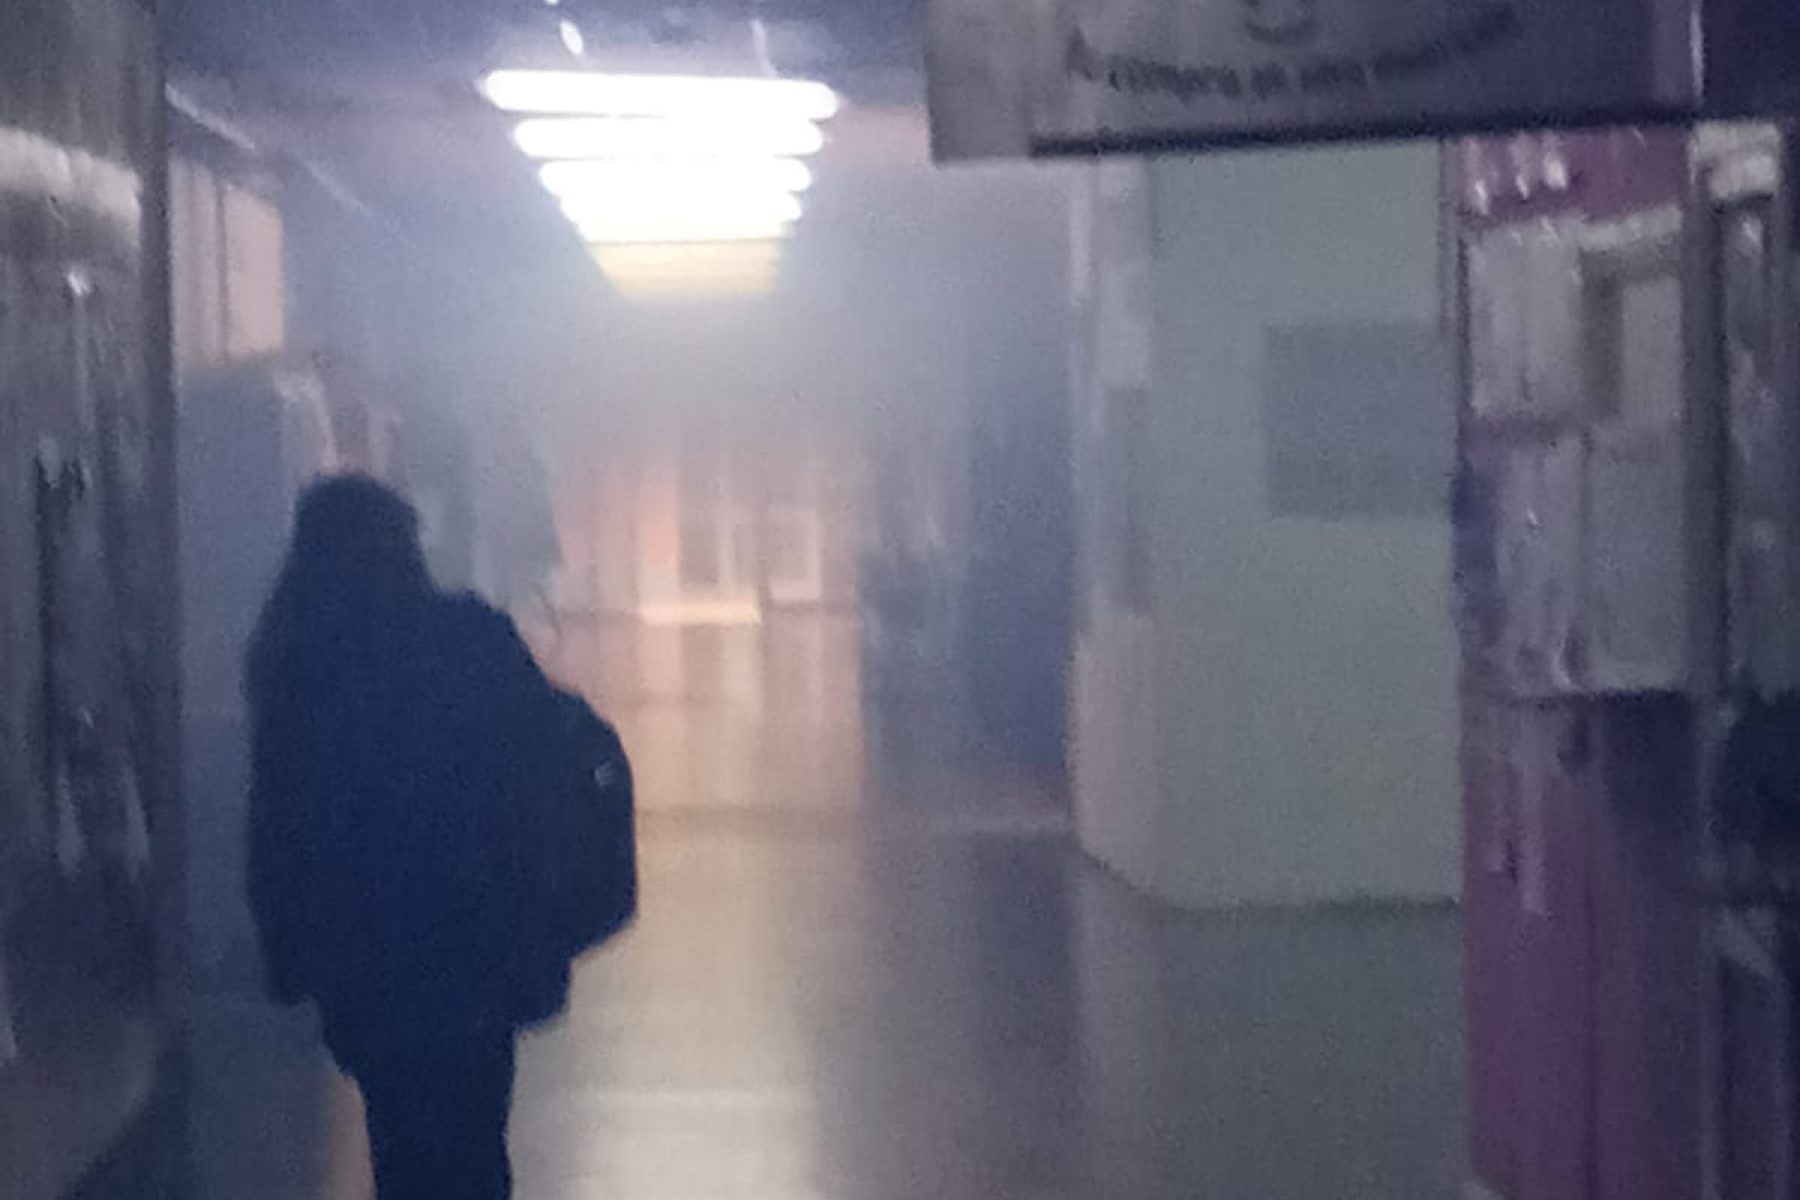 La Universidad del Comahue de Roca probó un sistema para reestablecer la clases, pero se llenó de humo